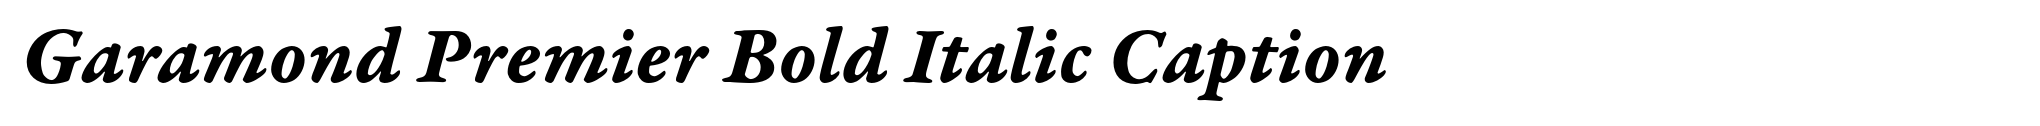 Garamond Premier Bold Italic Caption image